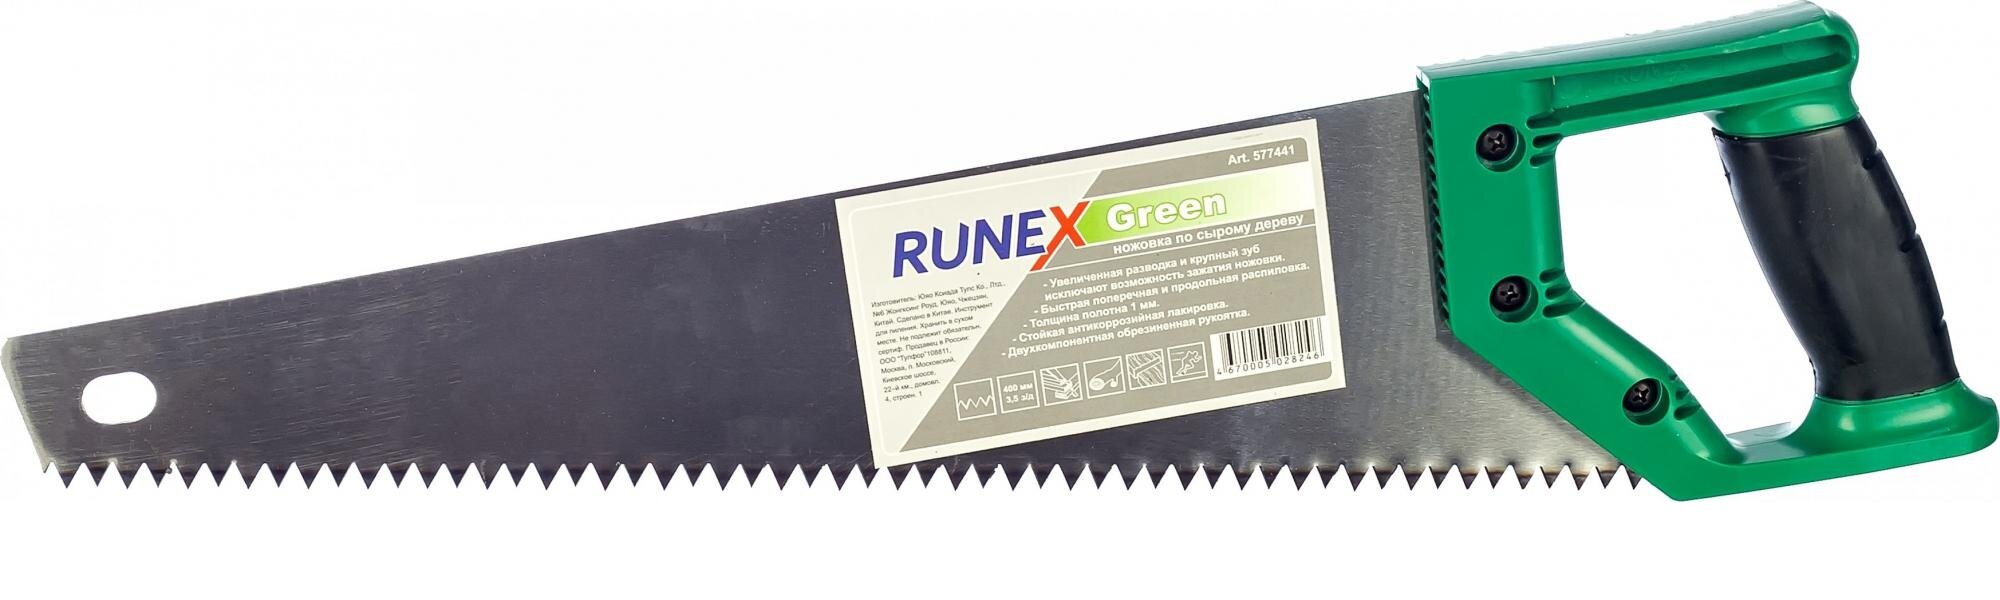 Ножовка по дереву RUNEX Green 400 мм 577441